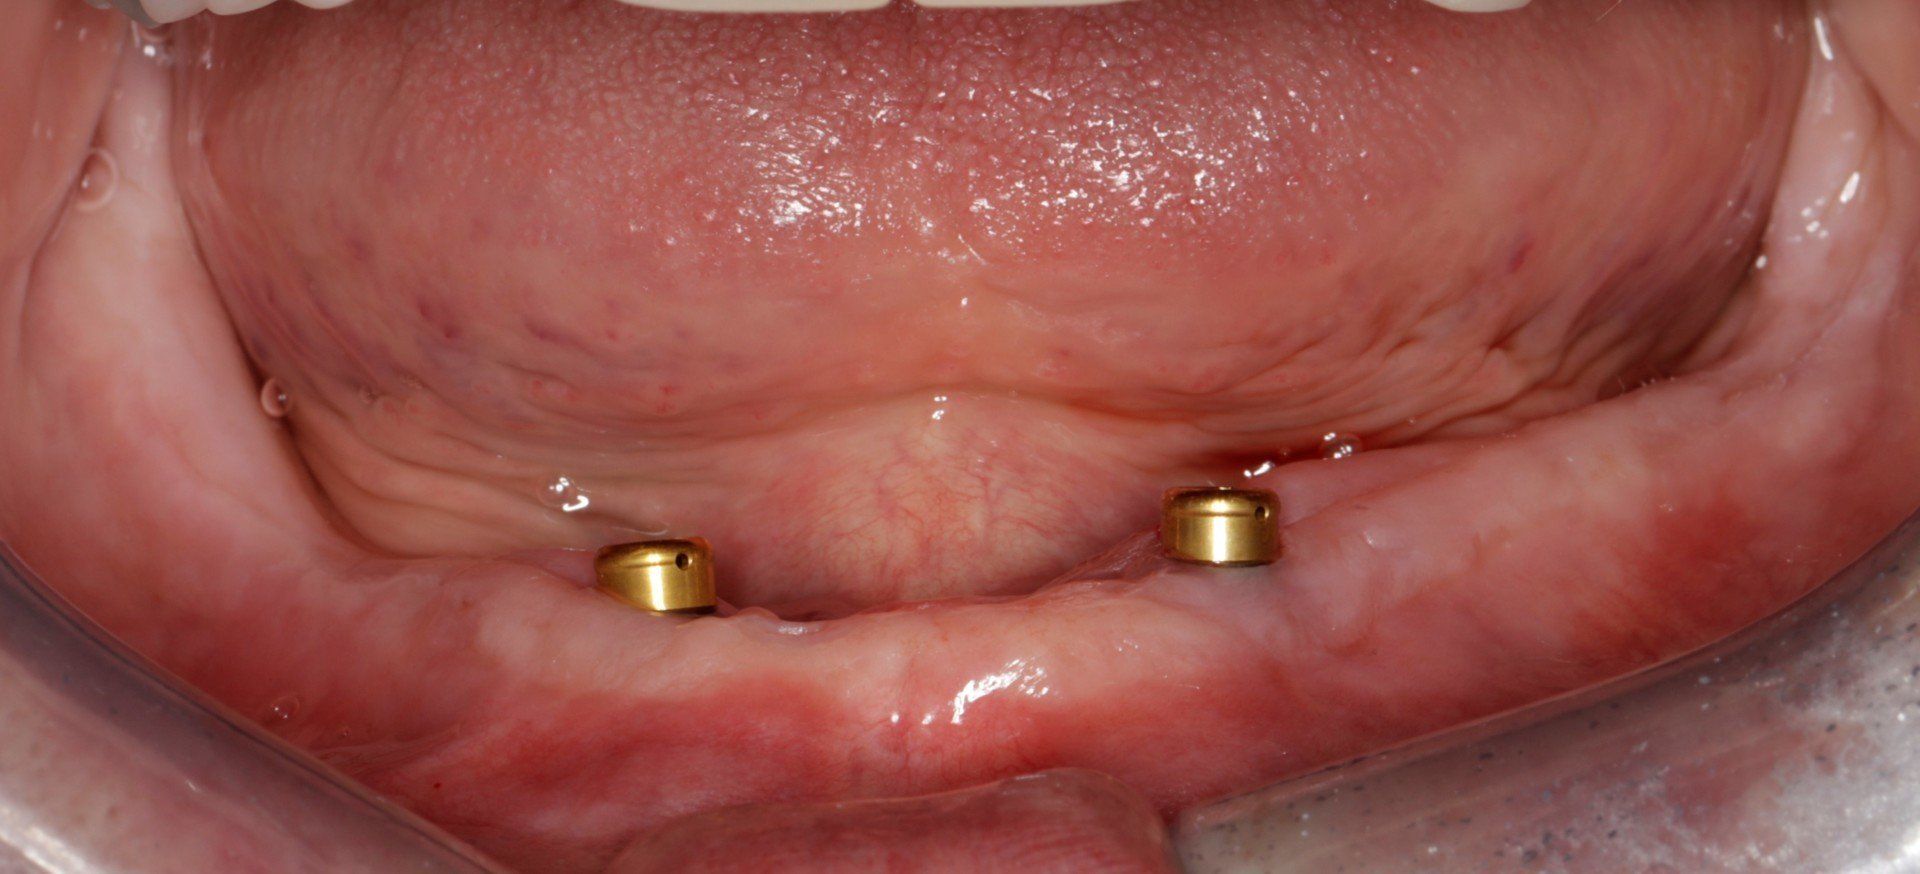 Before dental implant treatment